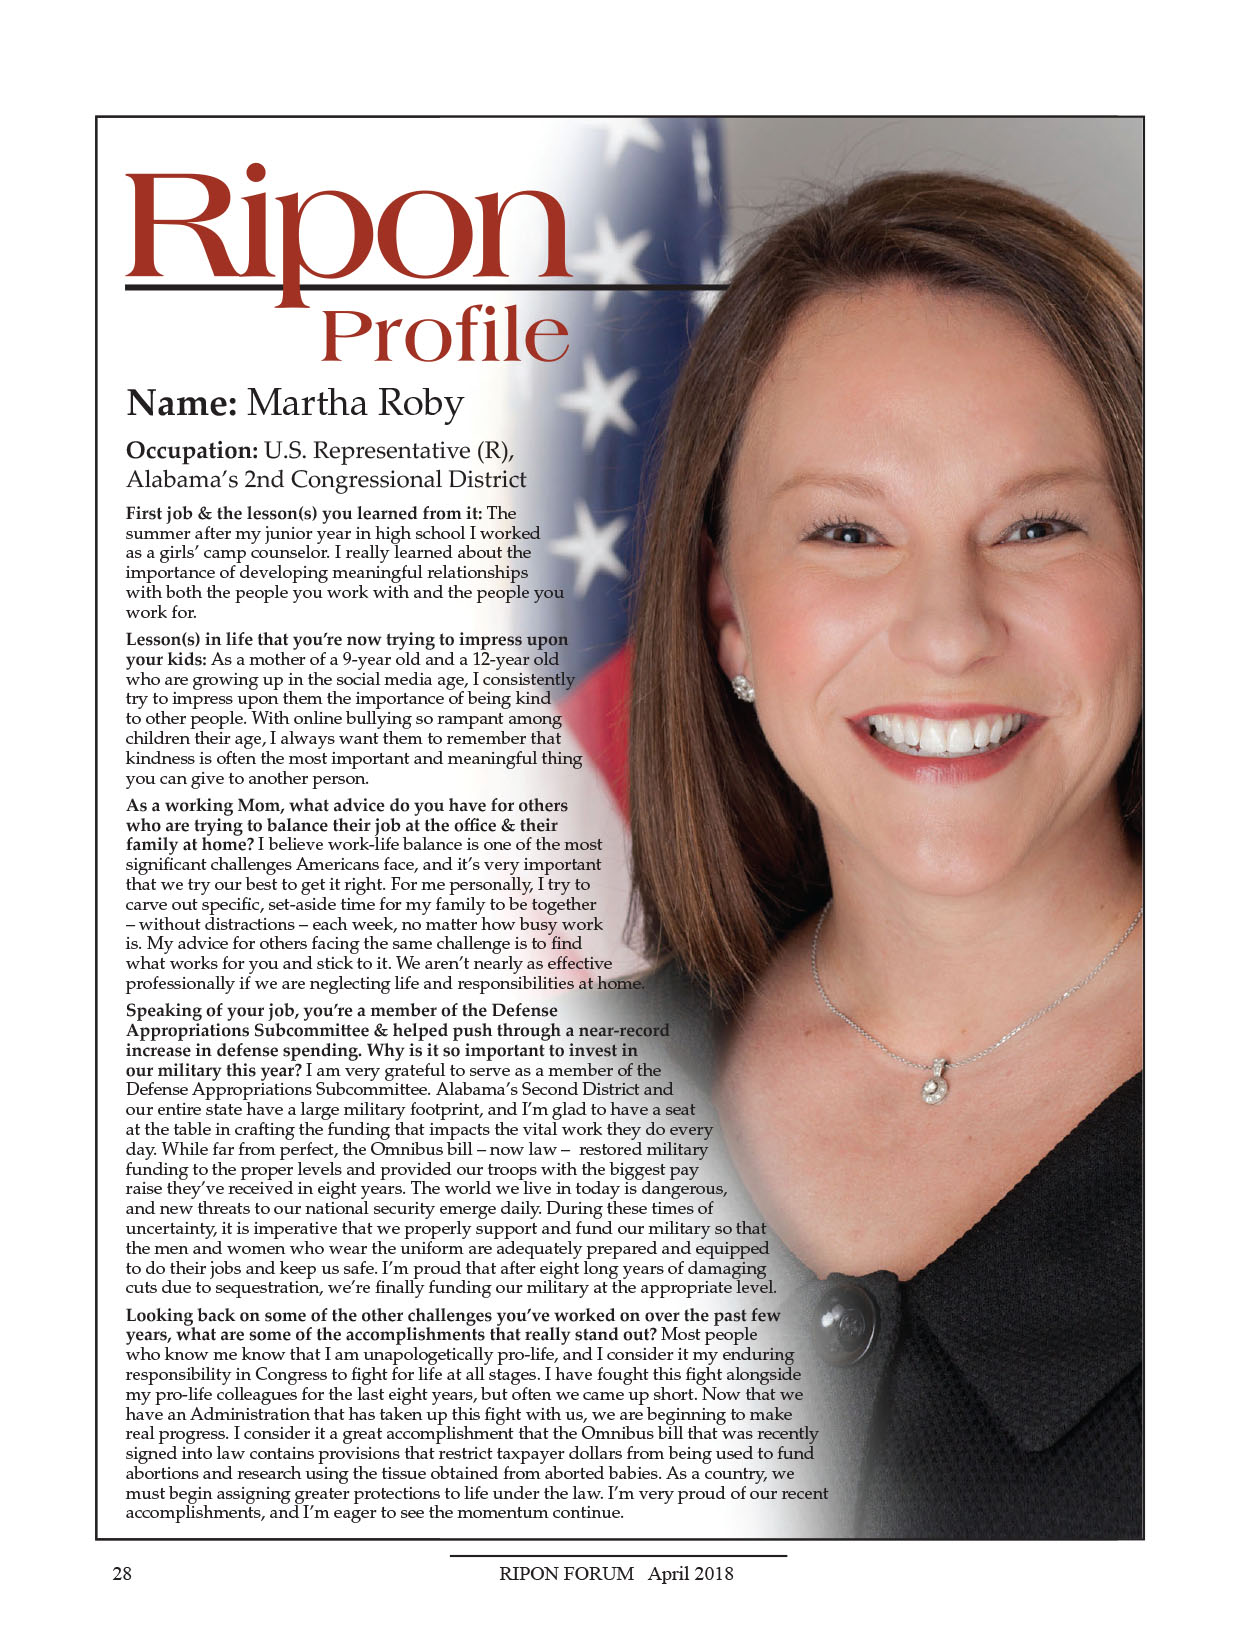 Ripon Profile of Martha Roby